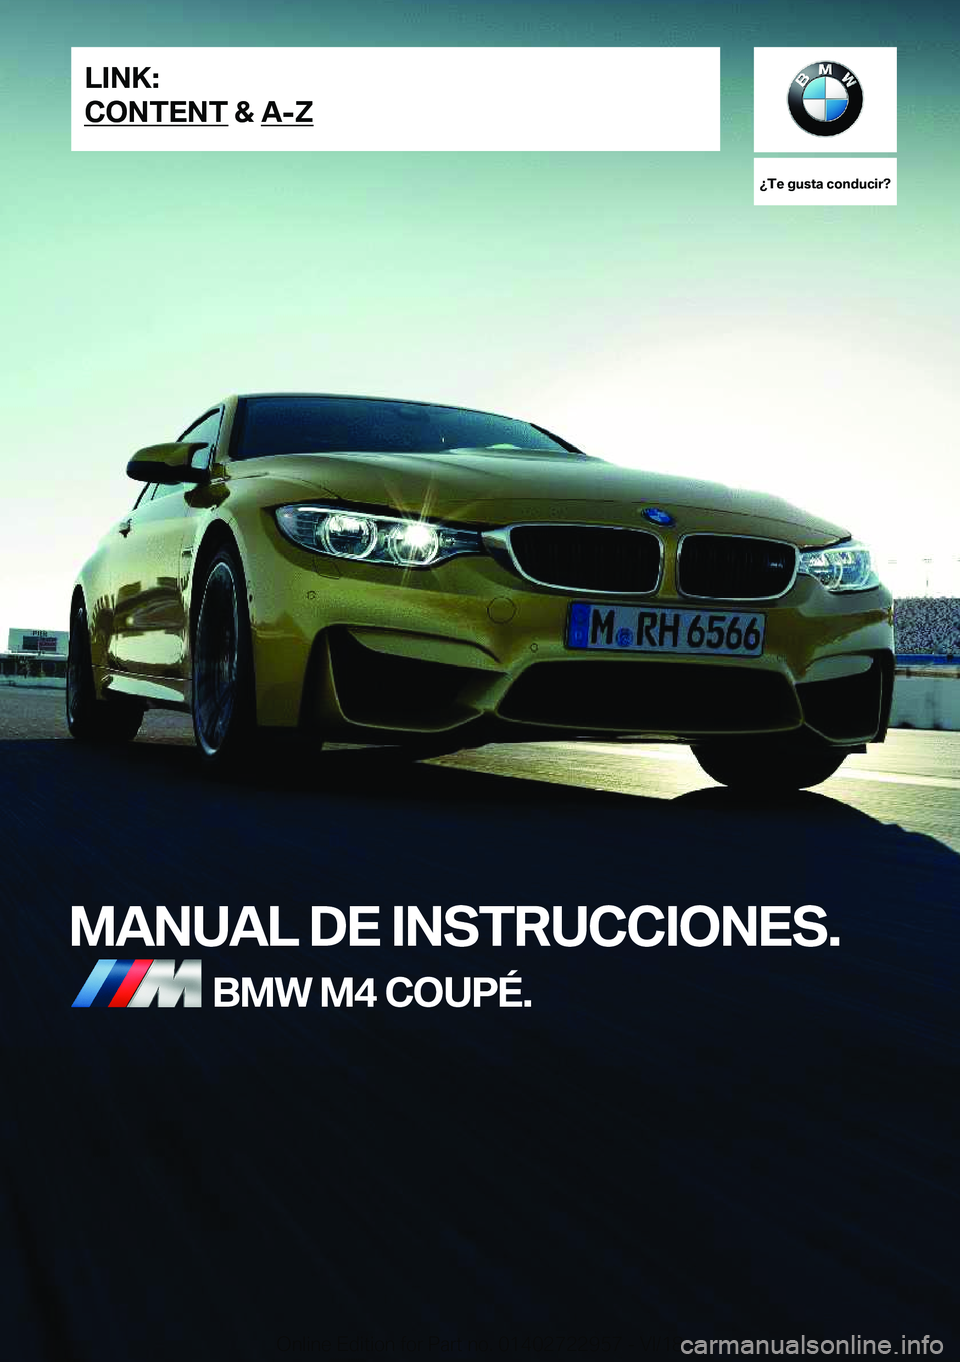 BMW M4 2019  Manuales de Empleo (in Spanish) ��T�e��g�u�s�t�a��c�o�n�d�u�c�i�r� 
�M�A�N�U�A�L��D�E��I�N�S�T�R�U�C�C�I�O�N�E�S�.�B�M�W��M�4��C�O�U�P�